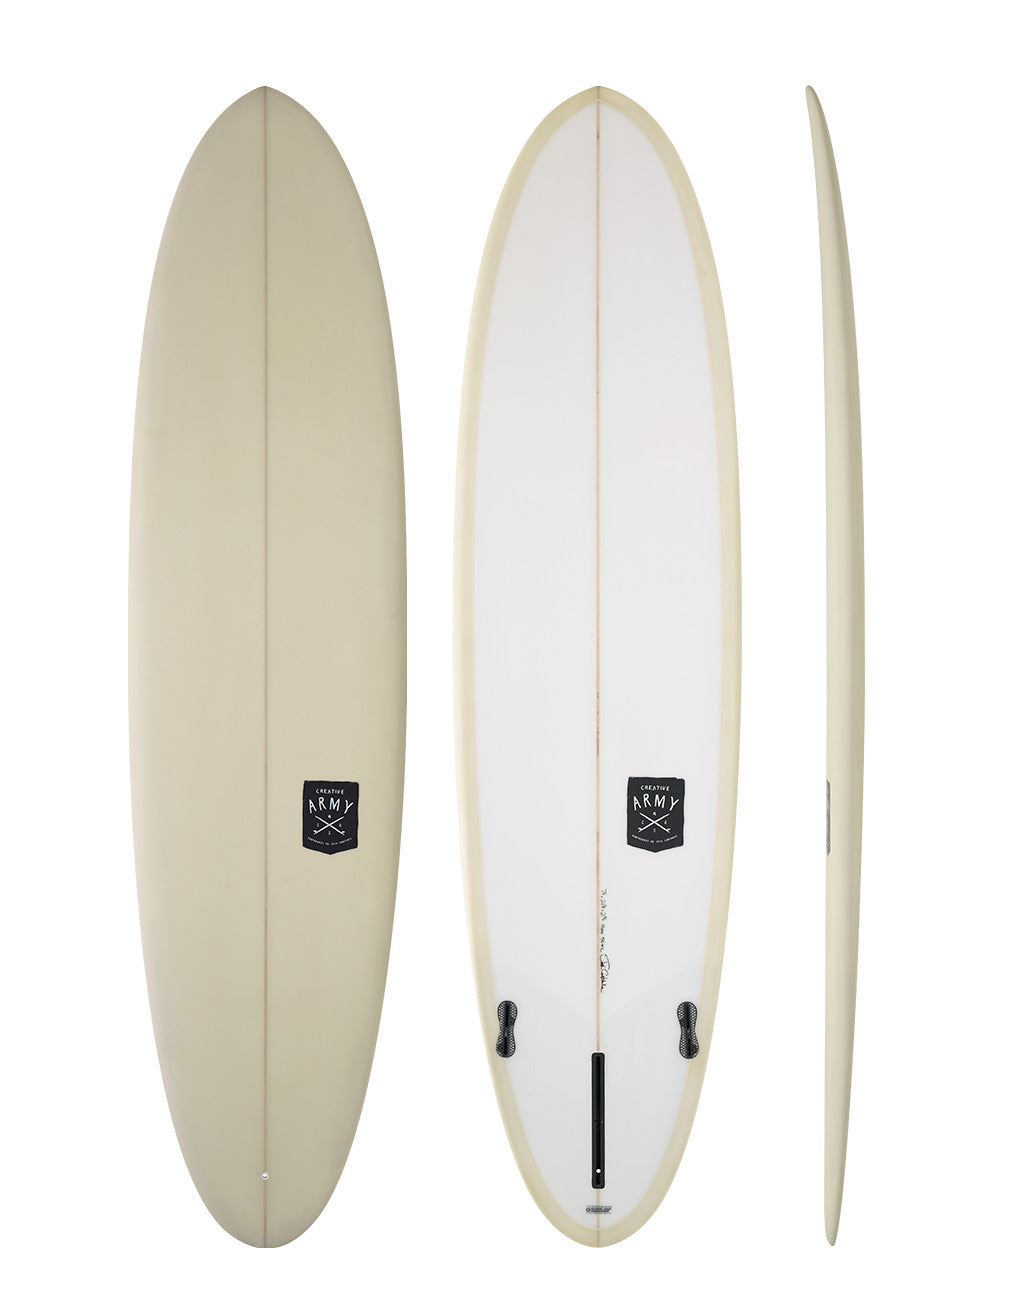 Creative Army Surfboards - Huevo stone colored surfboard